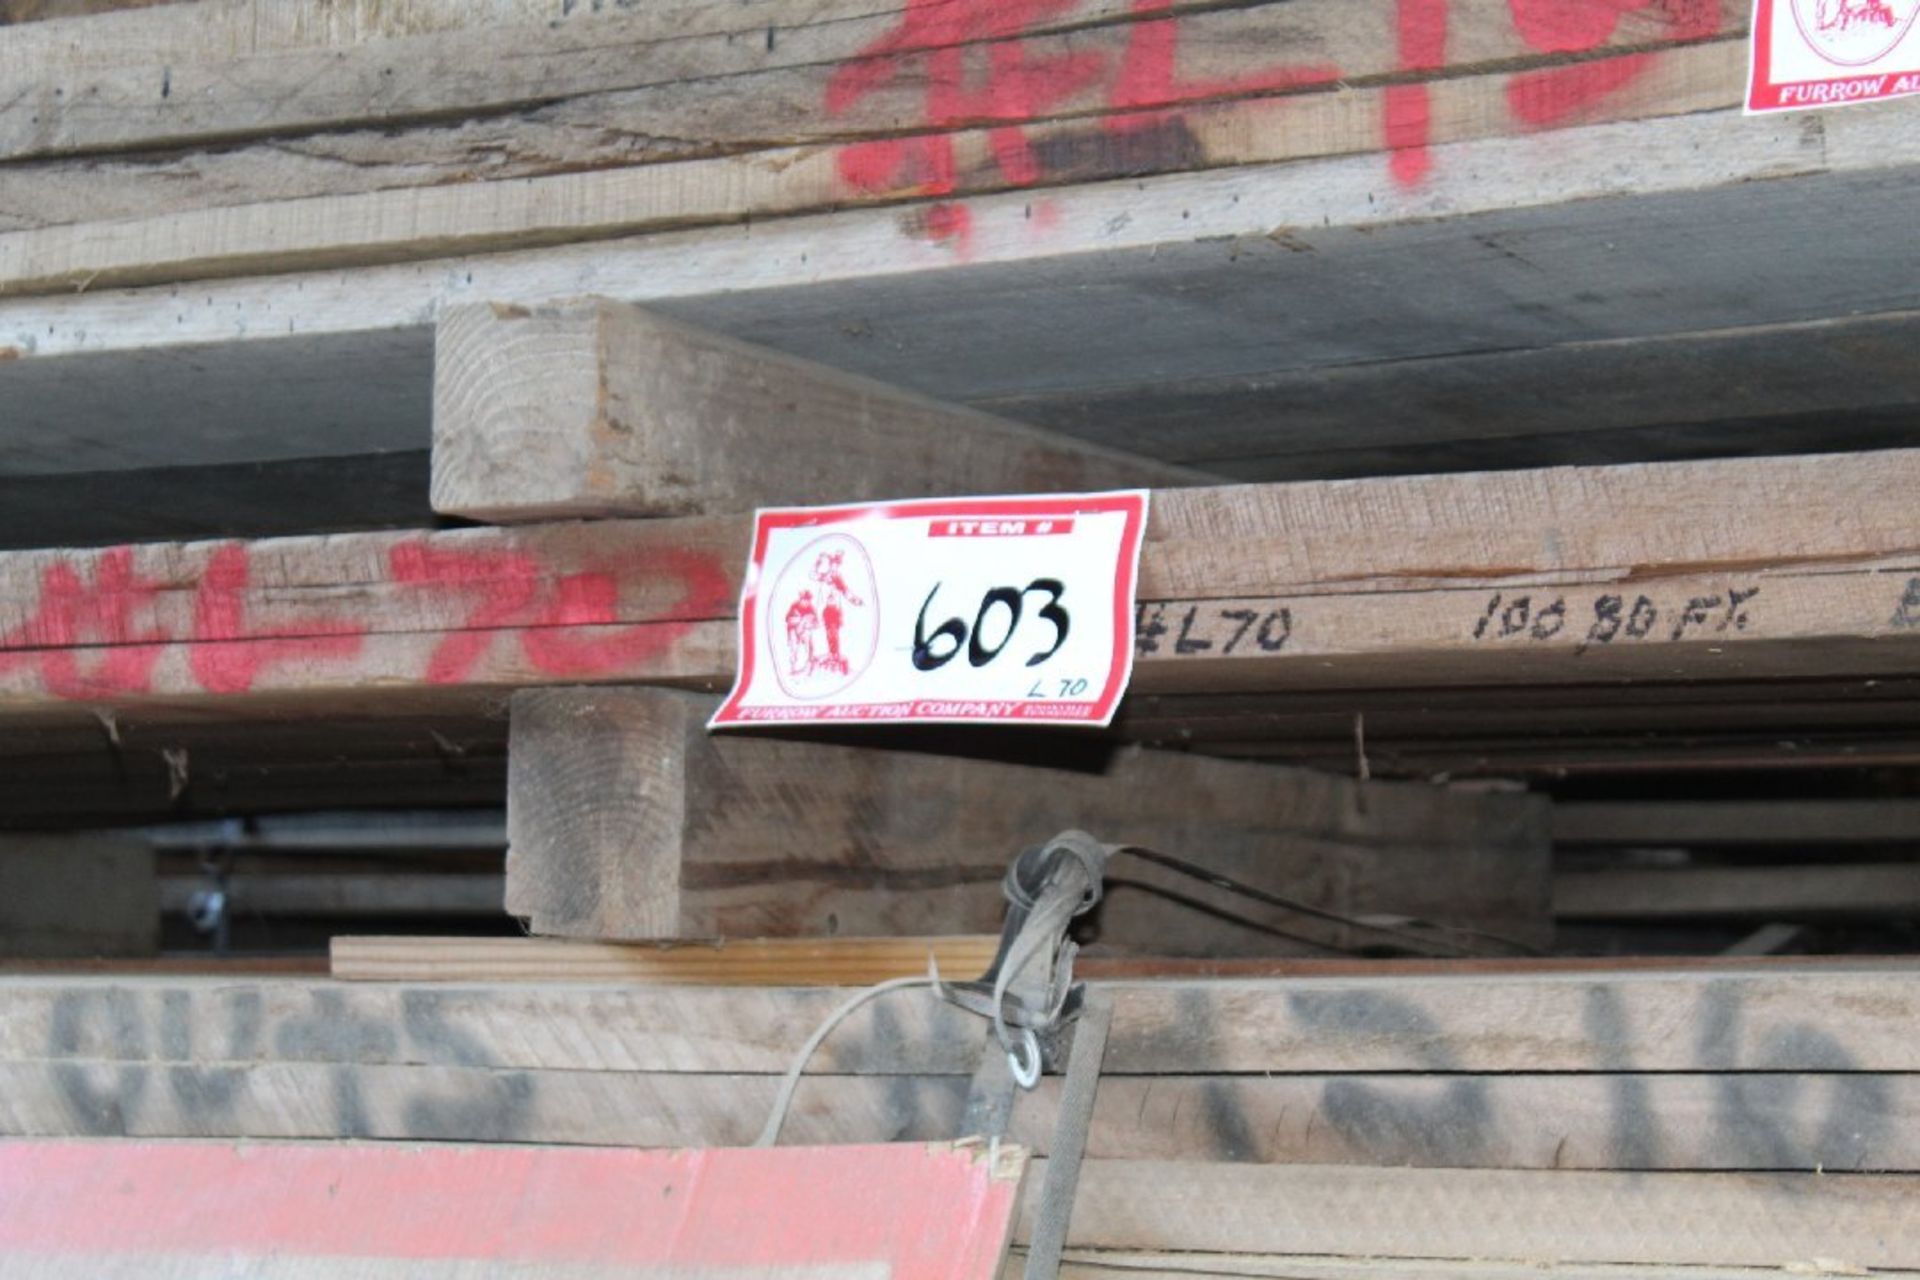 Tiger wood Lumber, Brazil, 14 - 16 foot length, 100 board foot. - Image 2 of 2